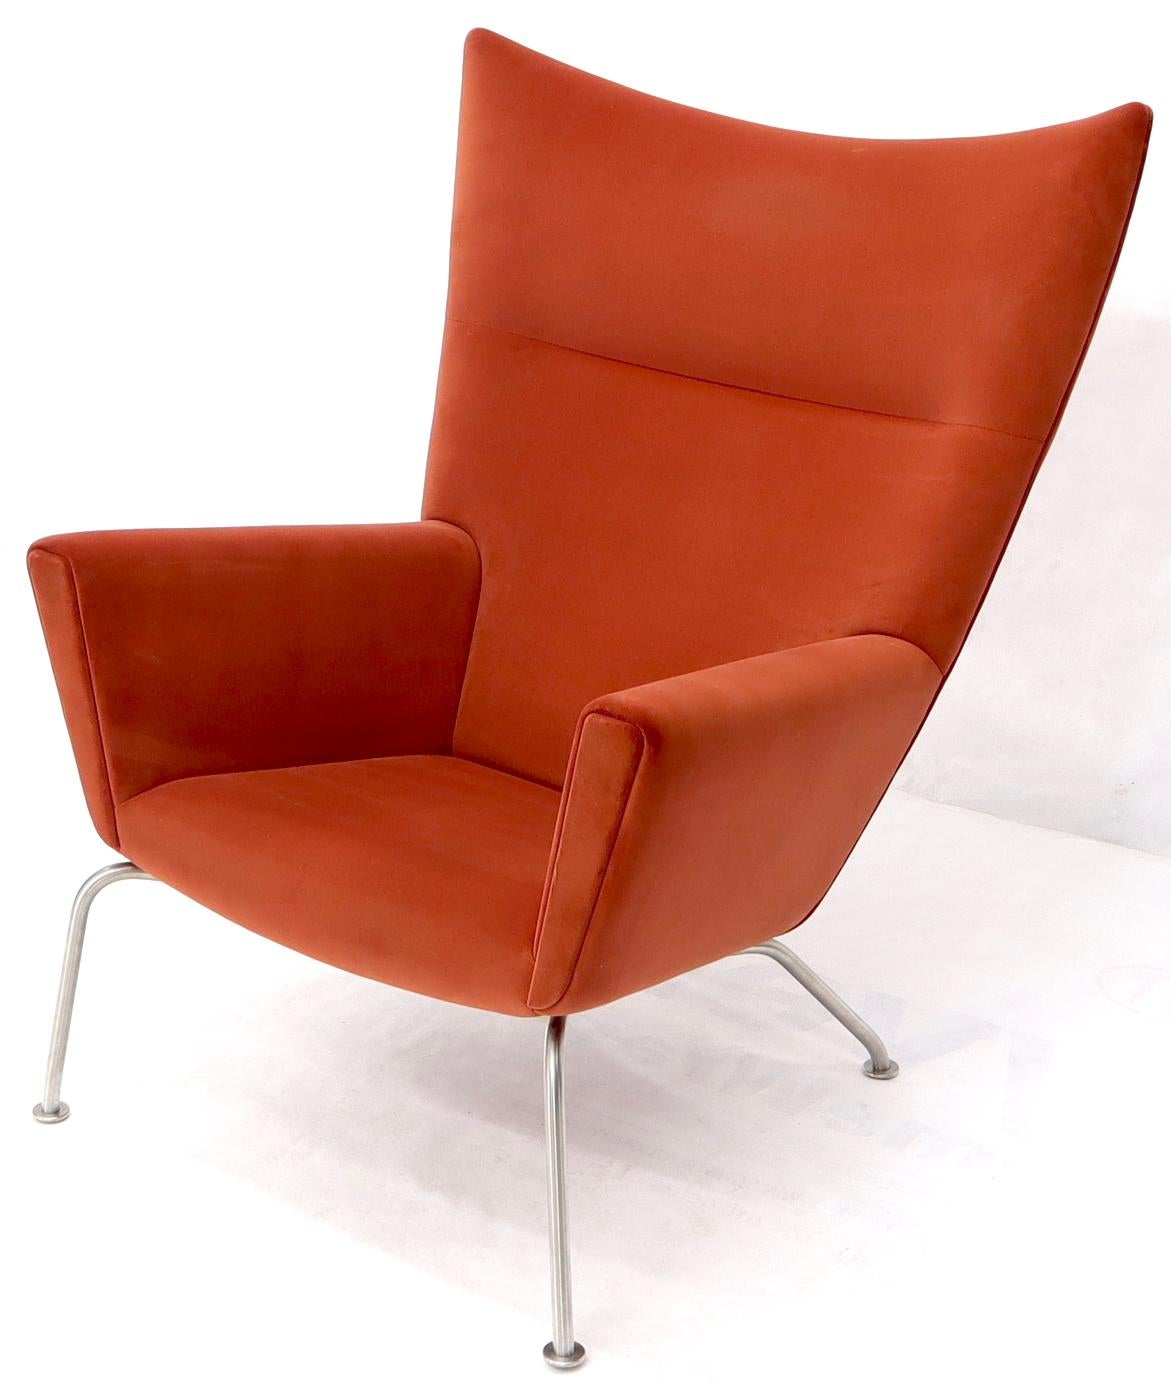 Pair of Hans Wegner for Carl Hansen Wing Chair in Orange Velvet like Fabric OX In Excellent Condition For Sale In Rockaway, NJ